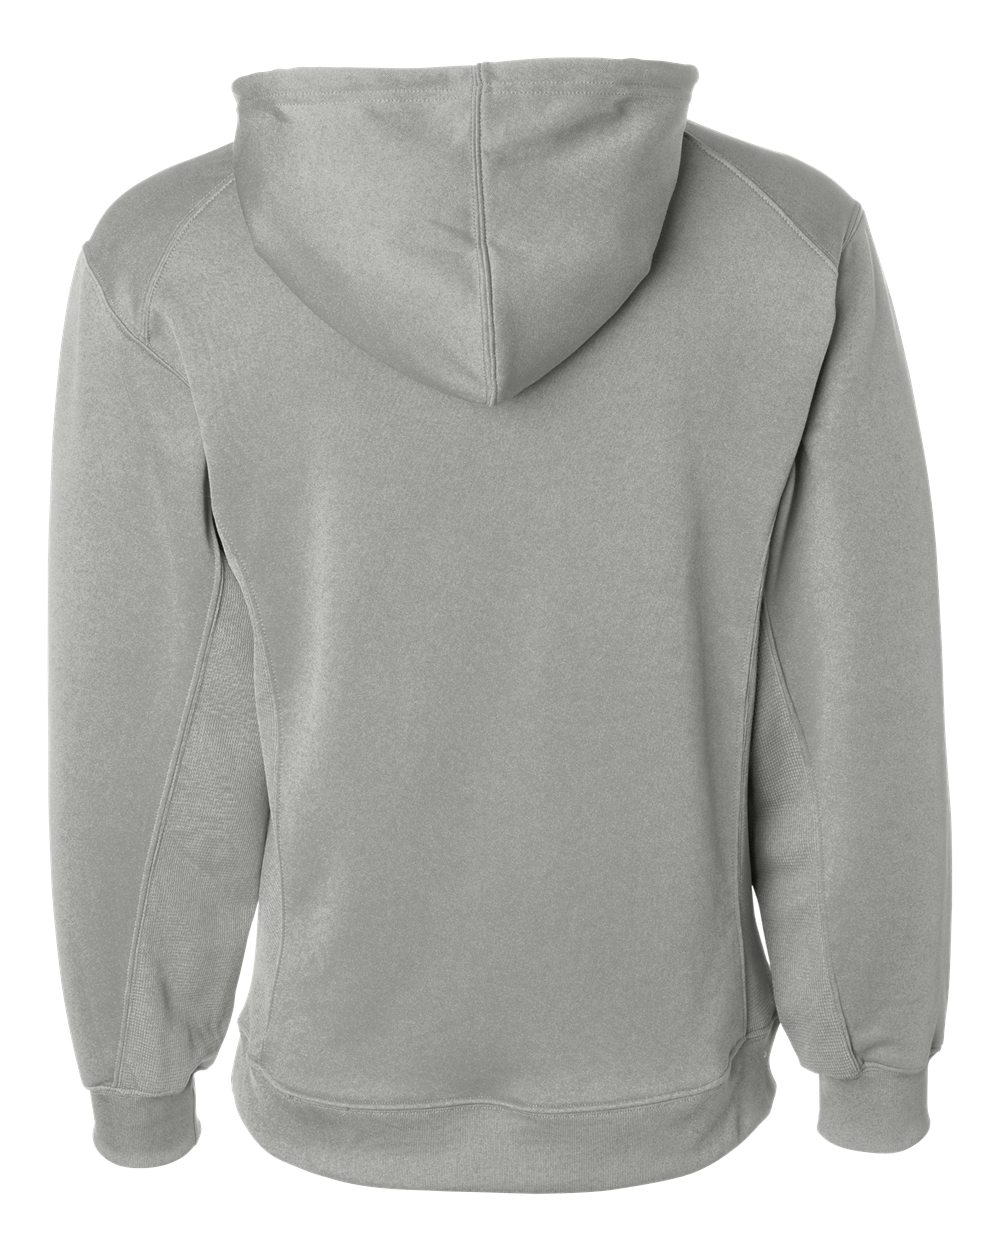 Badger Mens Performance Fleece Hooded Sweatshirt 1454 up to 3XL | eBay